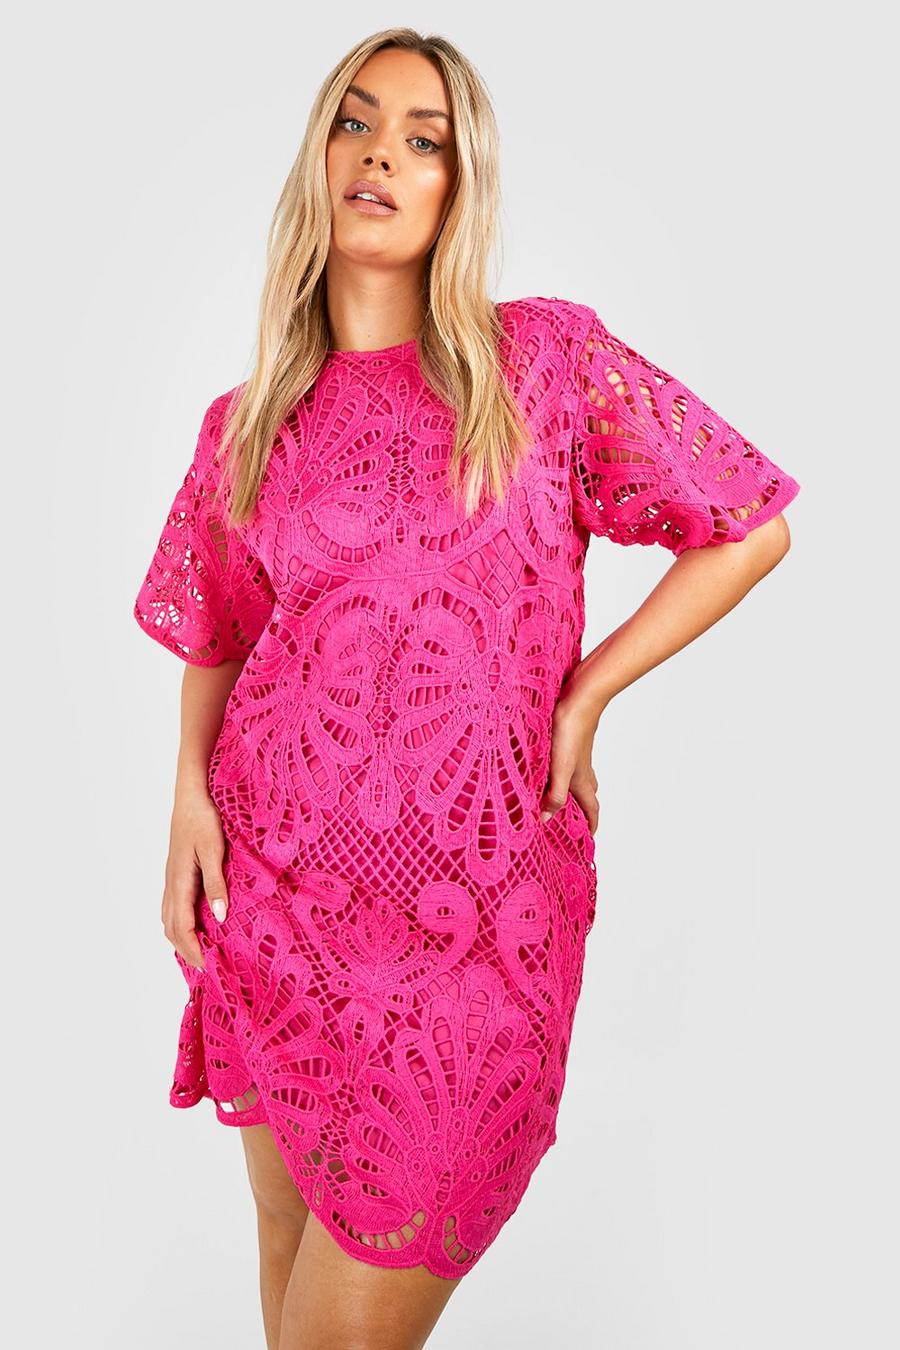 Grande taille - Robe premium en crochet, Hot pink